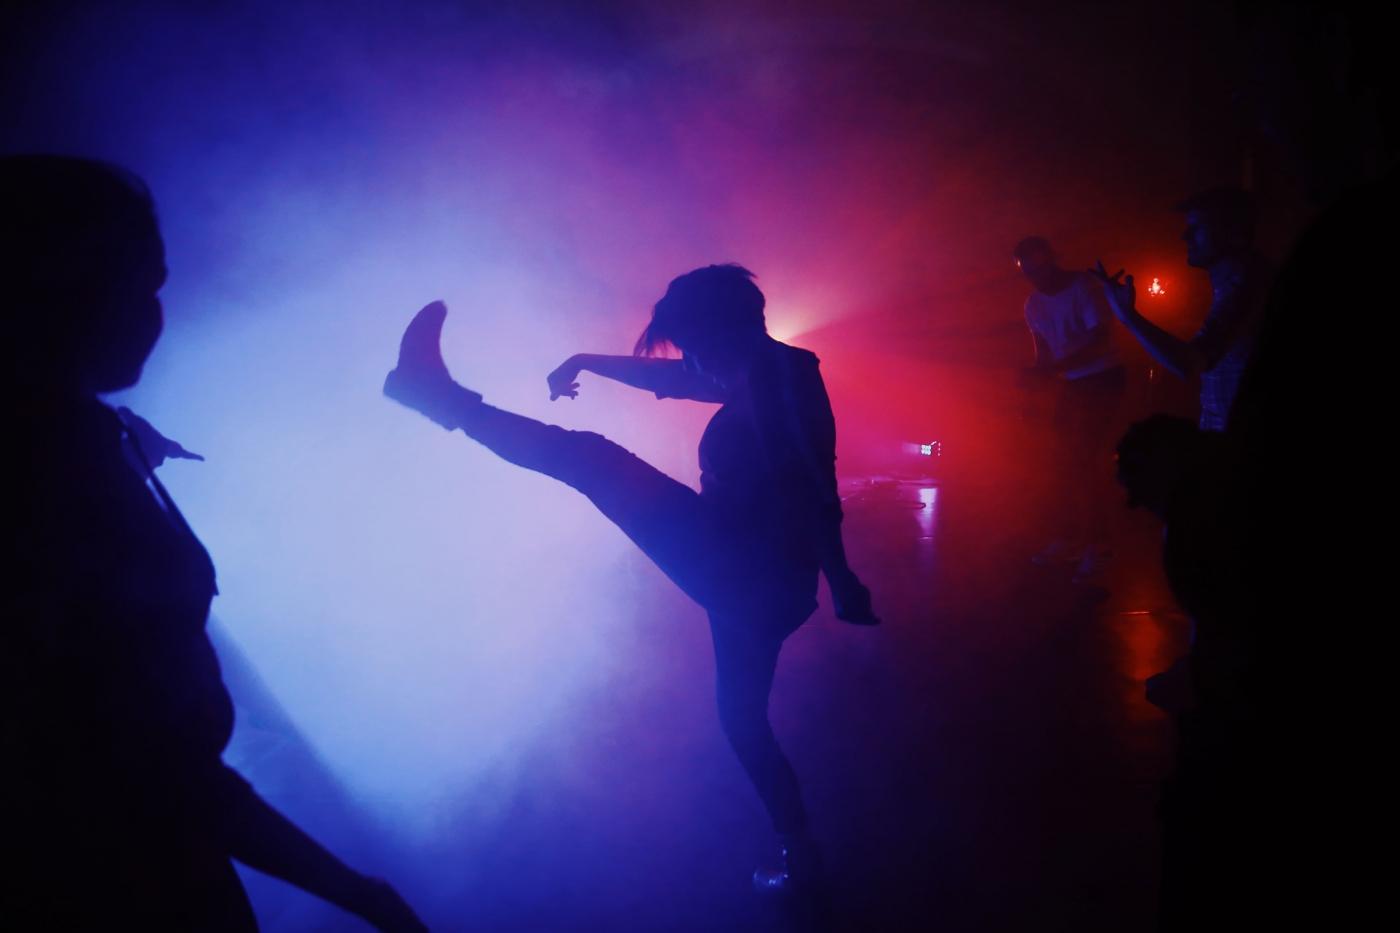 Kimmernaq Kjeldsen dances at the Disko Arts afterparty in Ilulissat after the final performance. Photo by Jessie Brinkman Evans